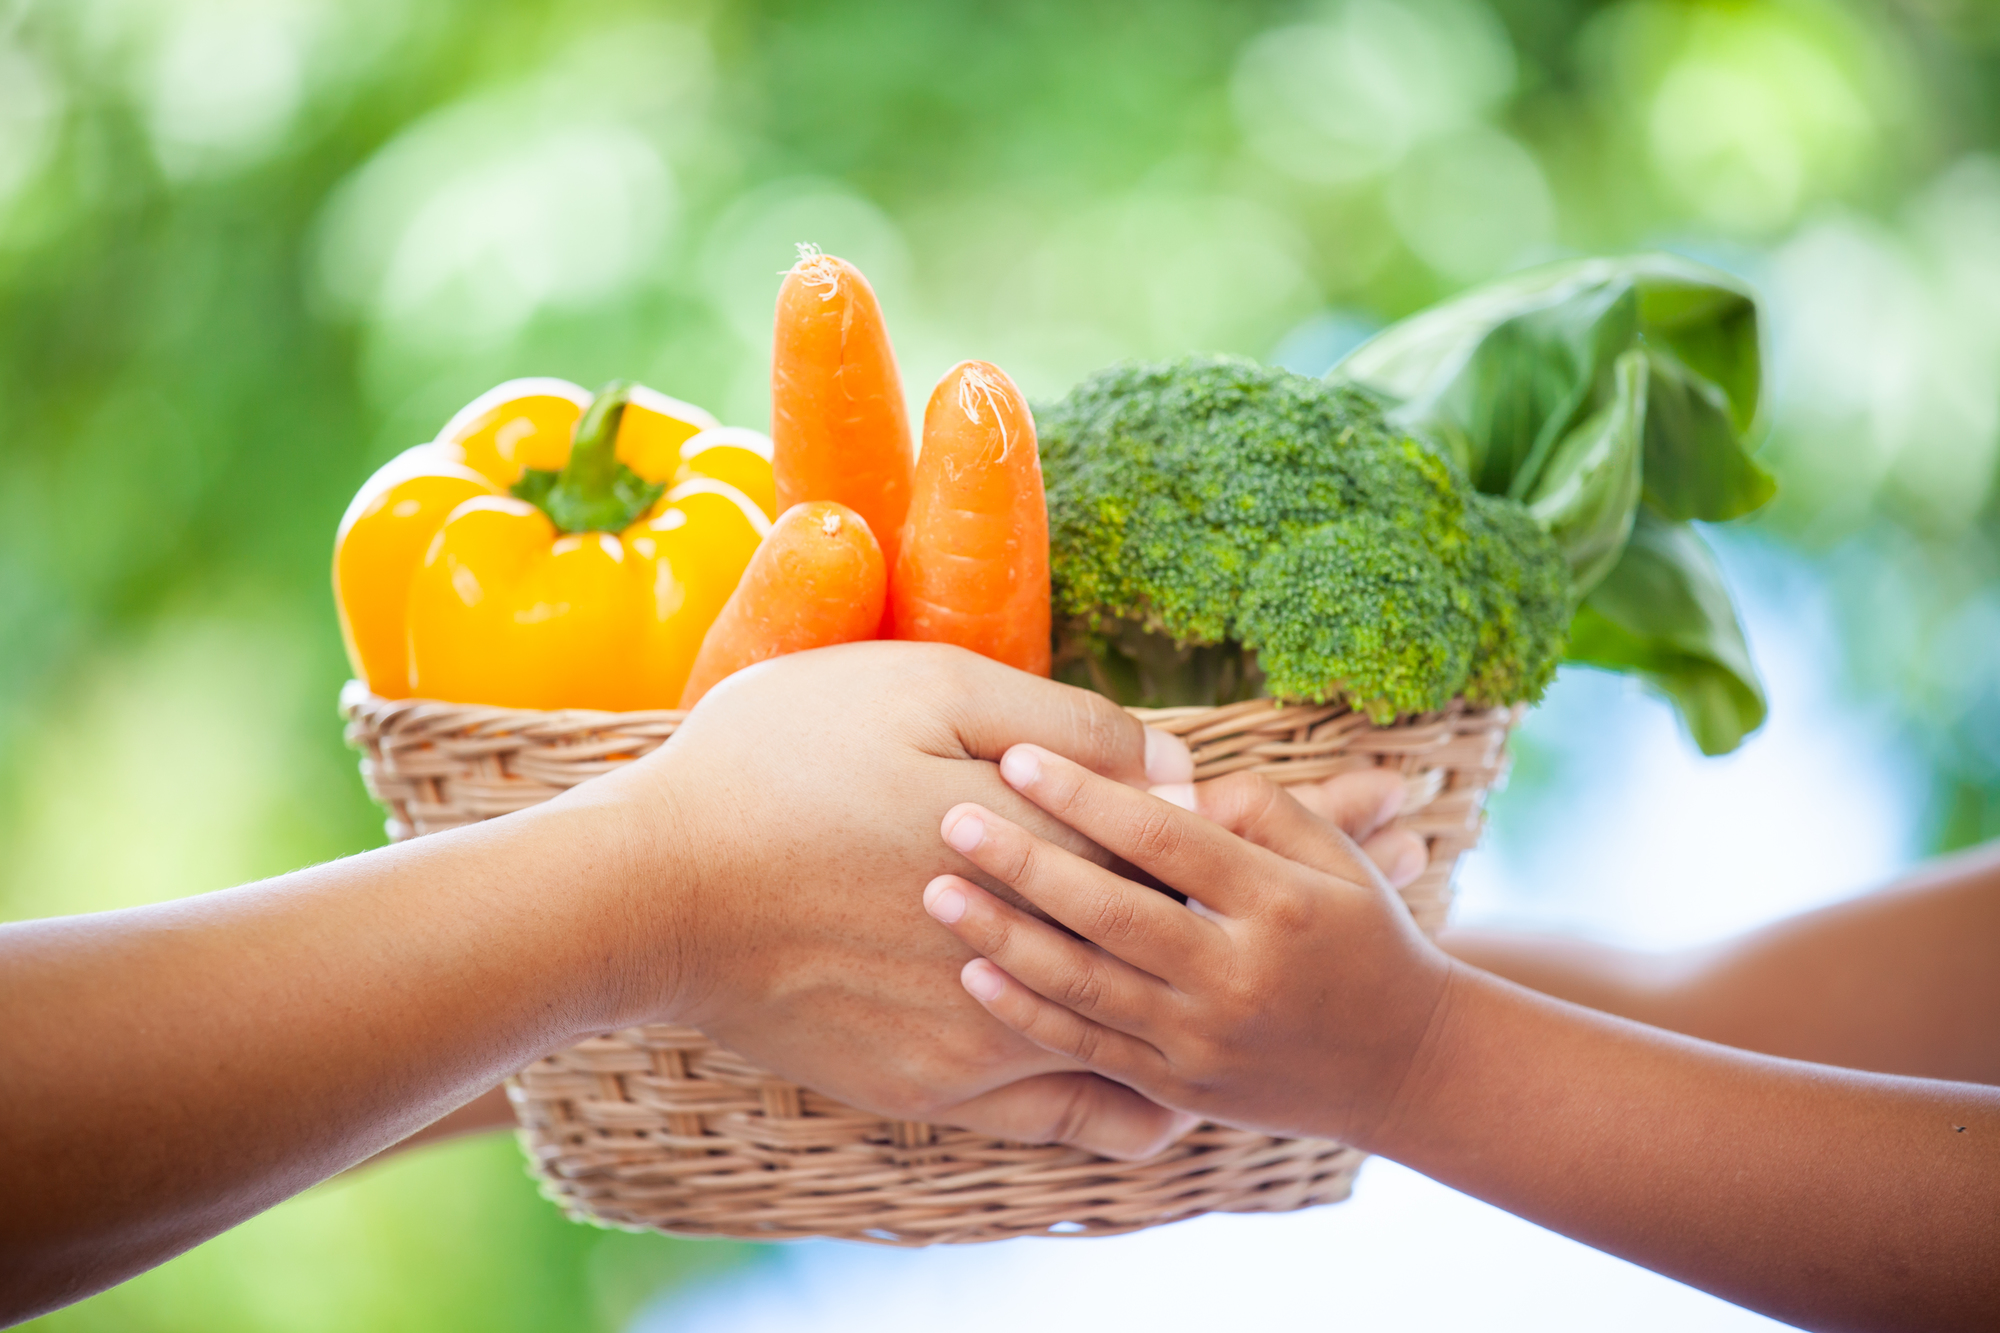 Mother hand and child hand holding basket of vegetables together